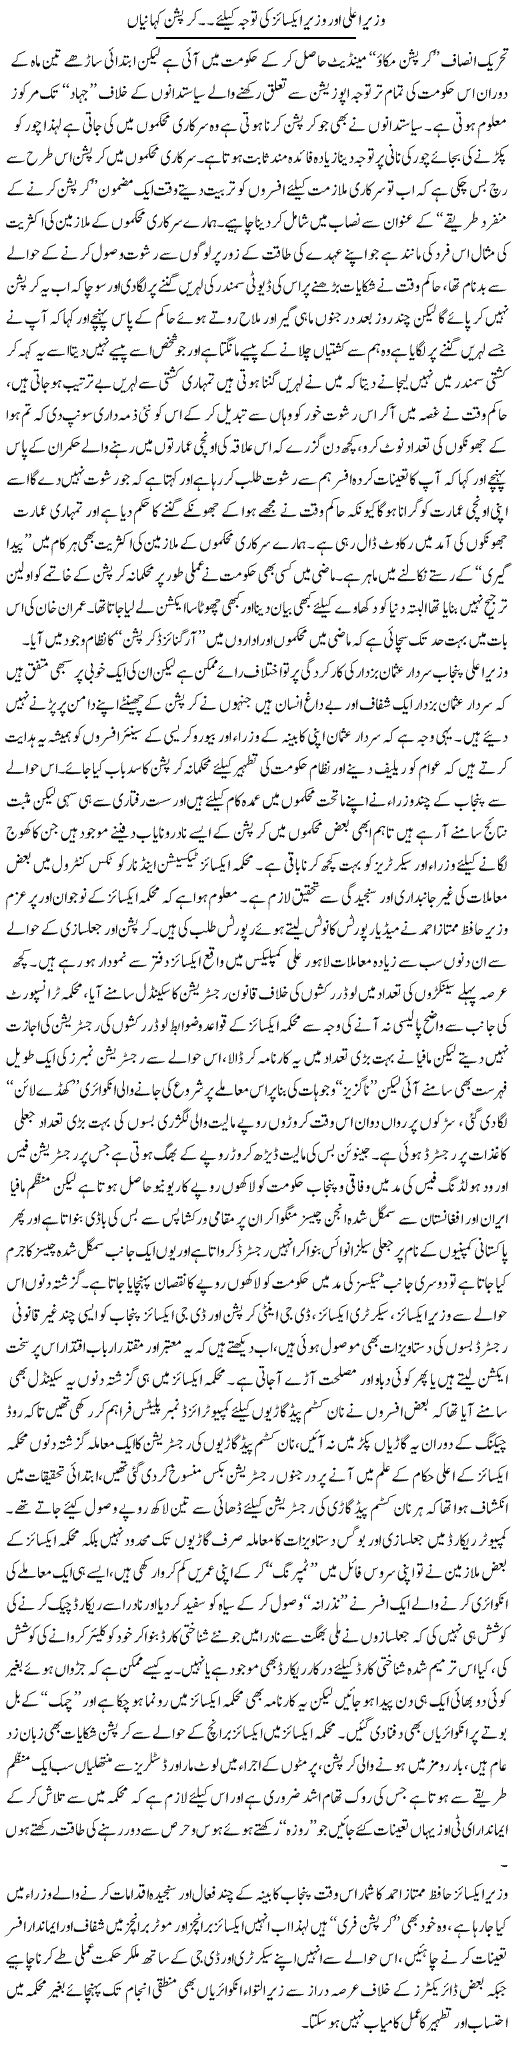 Wazir Aala Aur Wazir Excise Ki Tawajjo Ke Liye, Corruption Kahaniyan | Rizwan Asif | Daily Urdu Columns